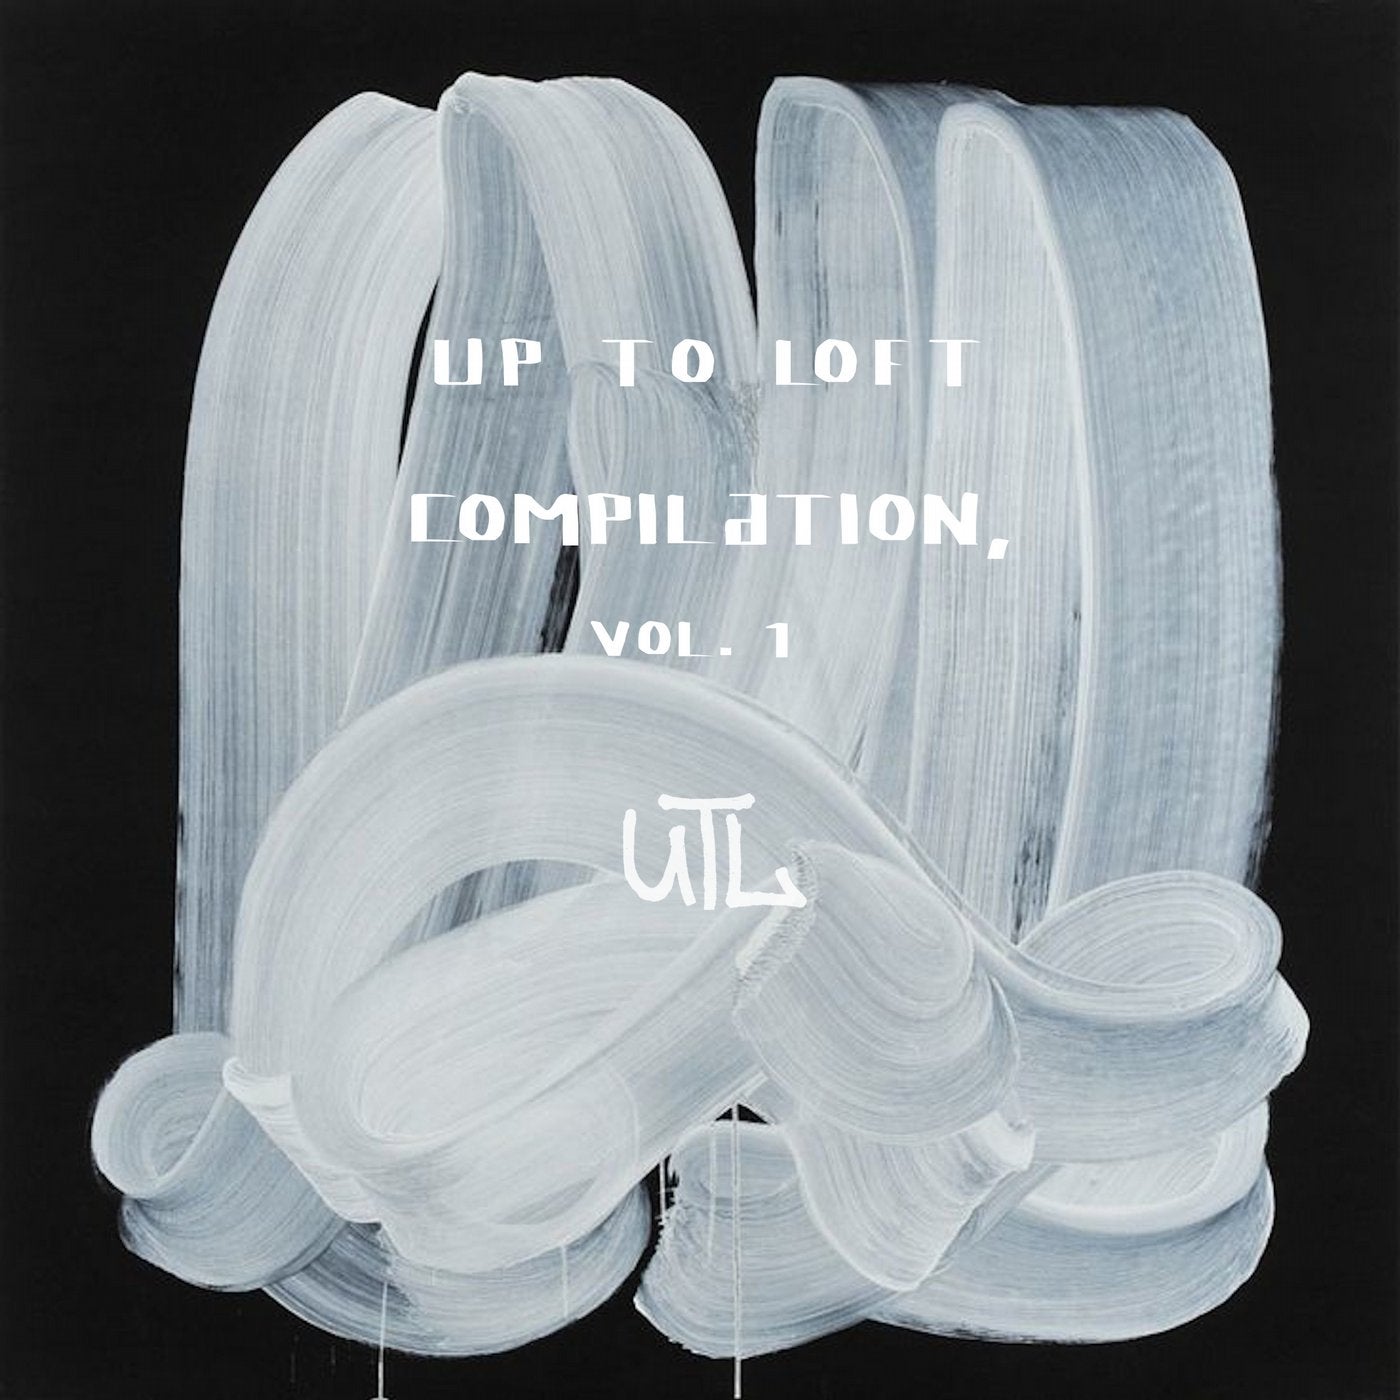 Up to Loft Compilation, Vol. 1